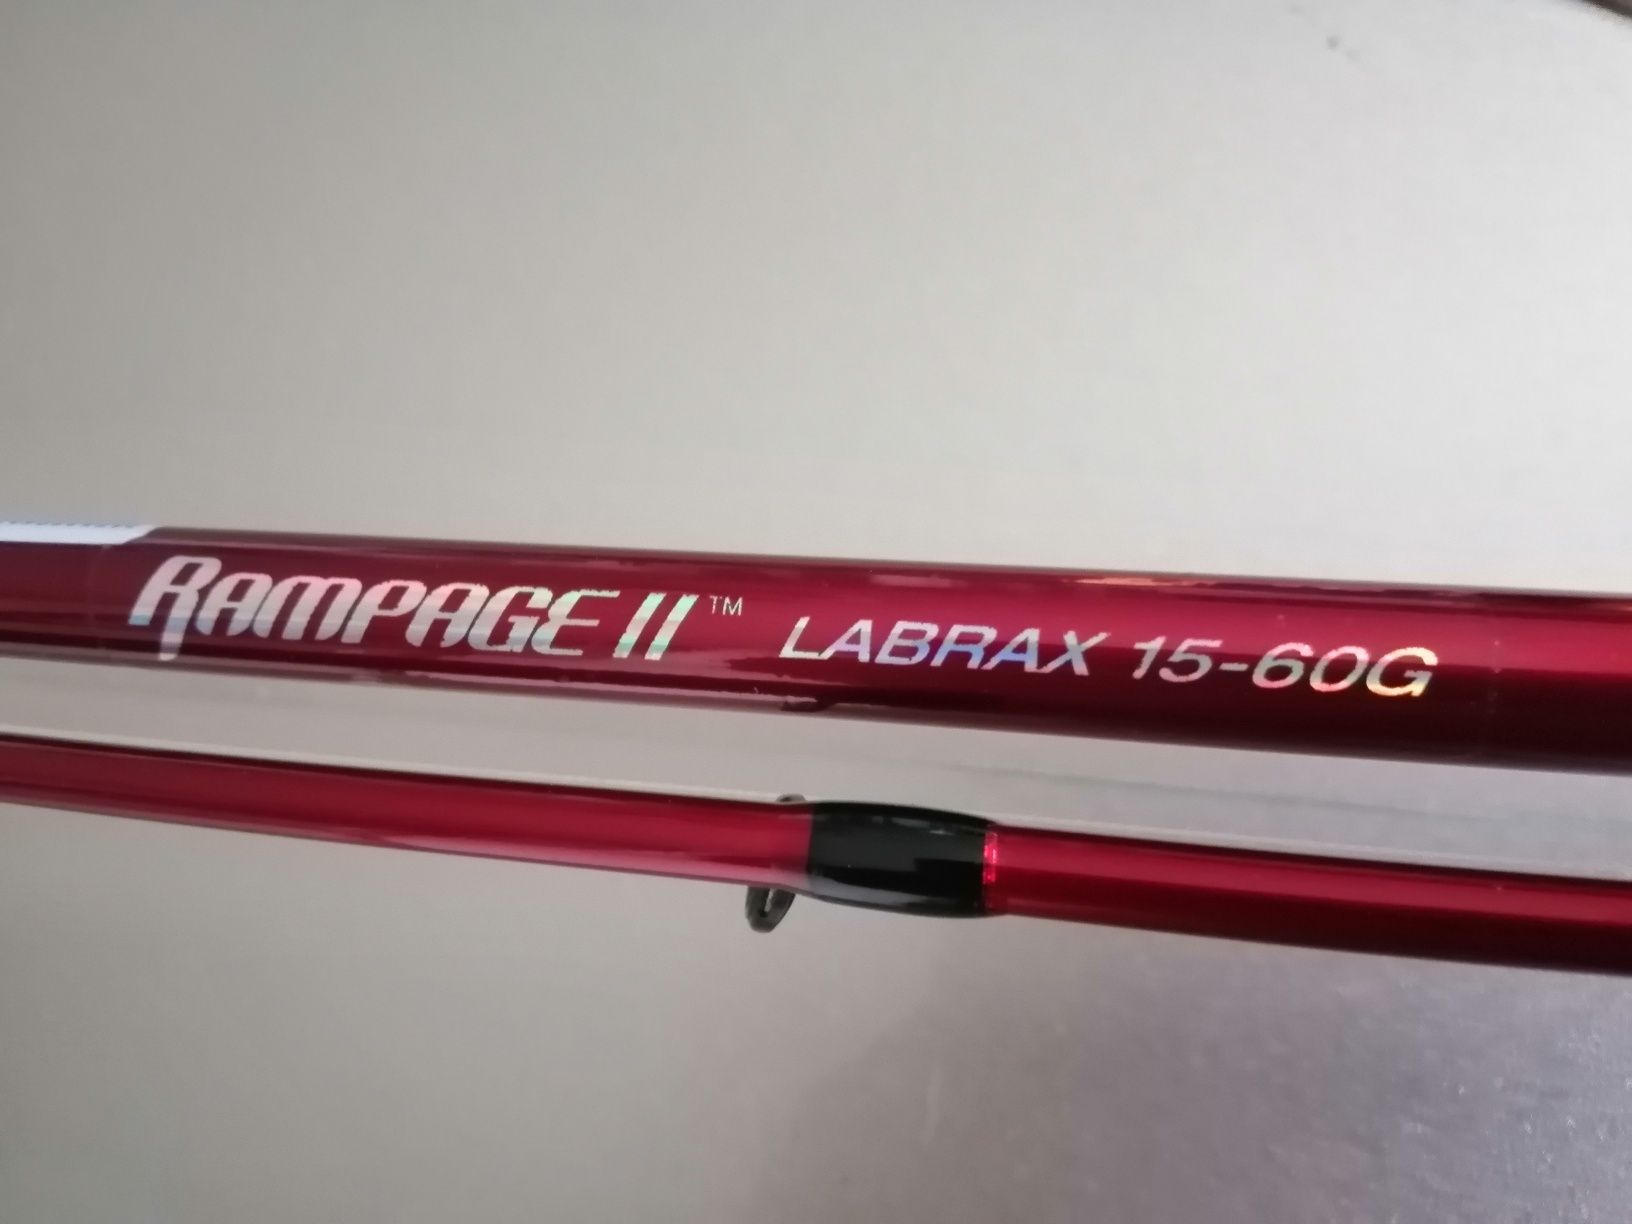 Penn rampage labrax II 2.33 15.60g, mepps, stradic, 50% ceny